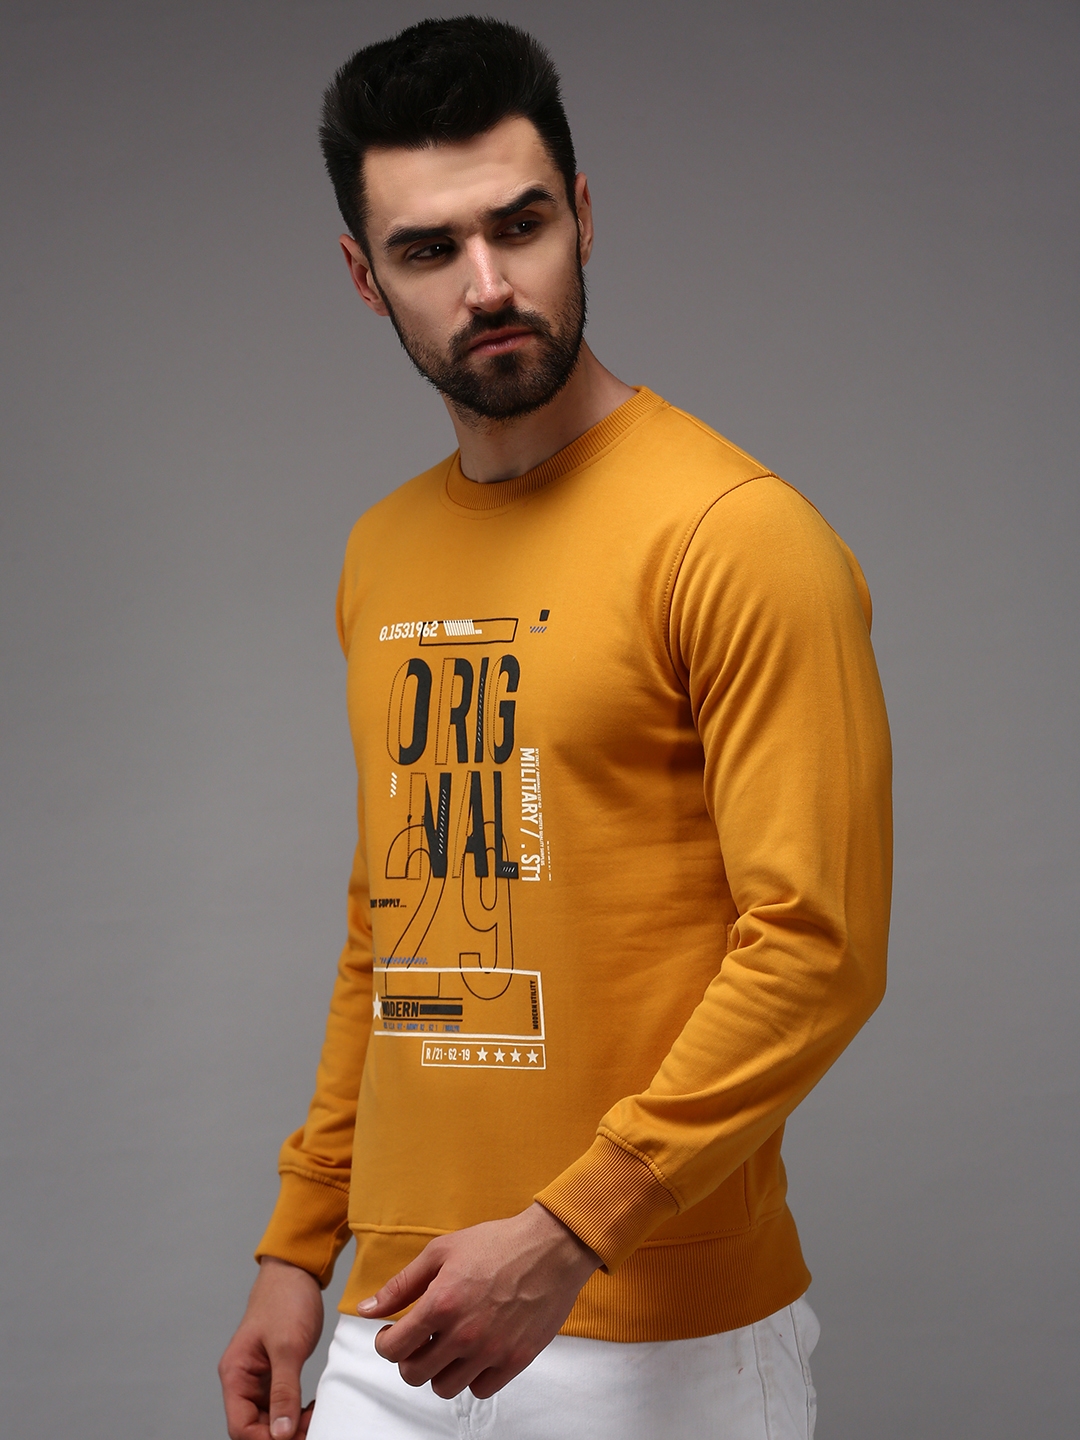 Men's Yellow Cotton Printed Sweatshirts